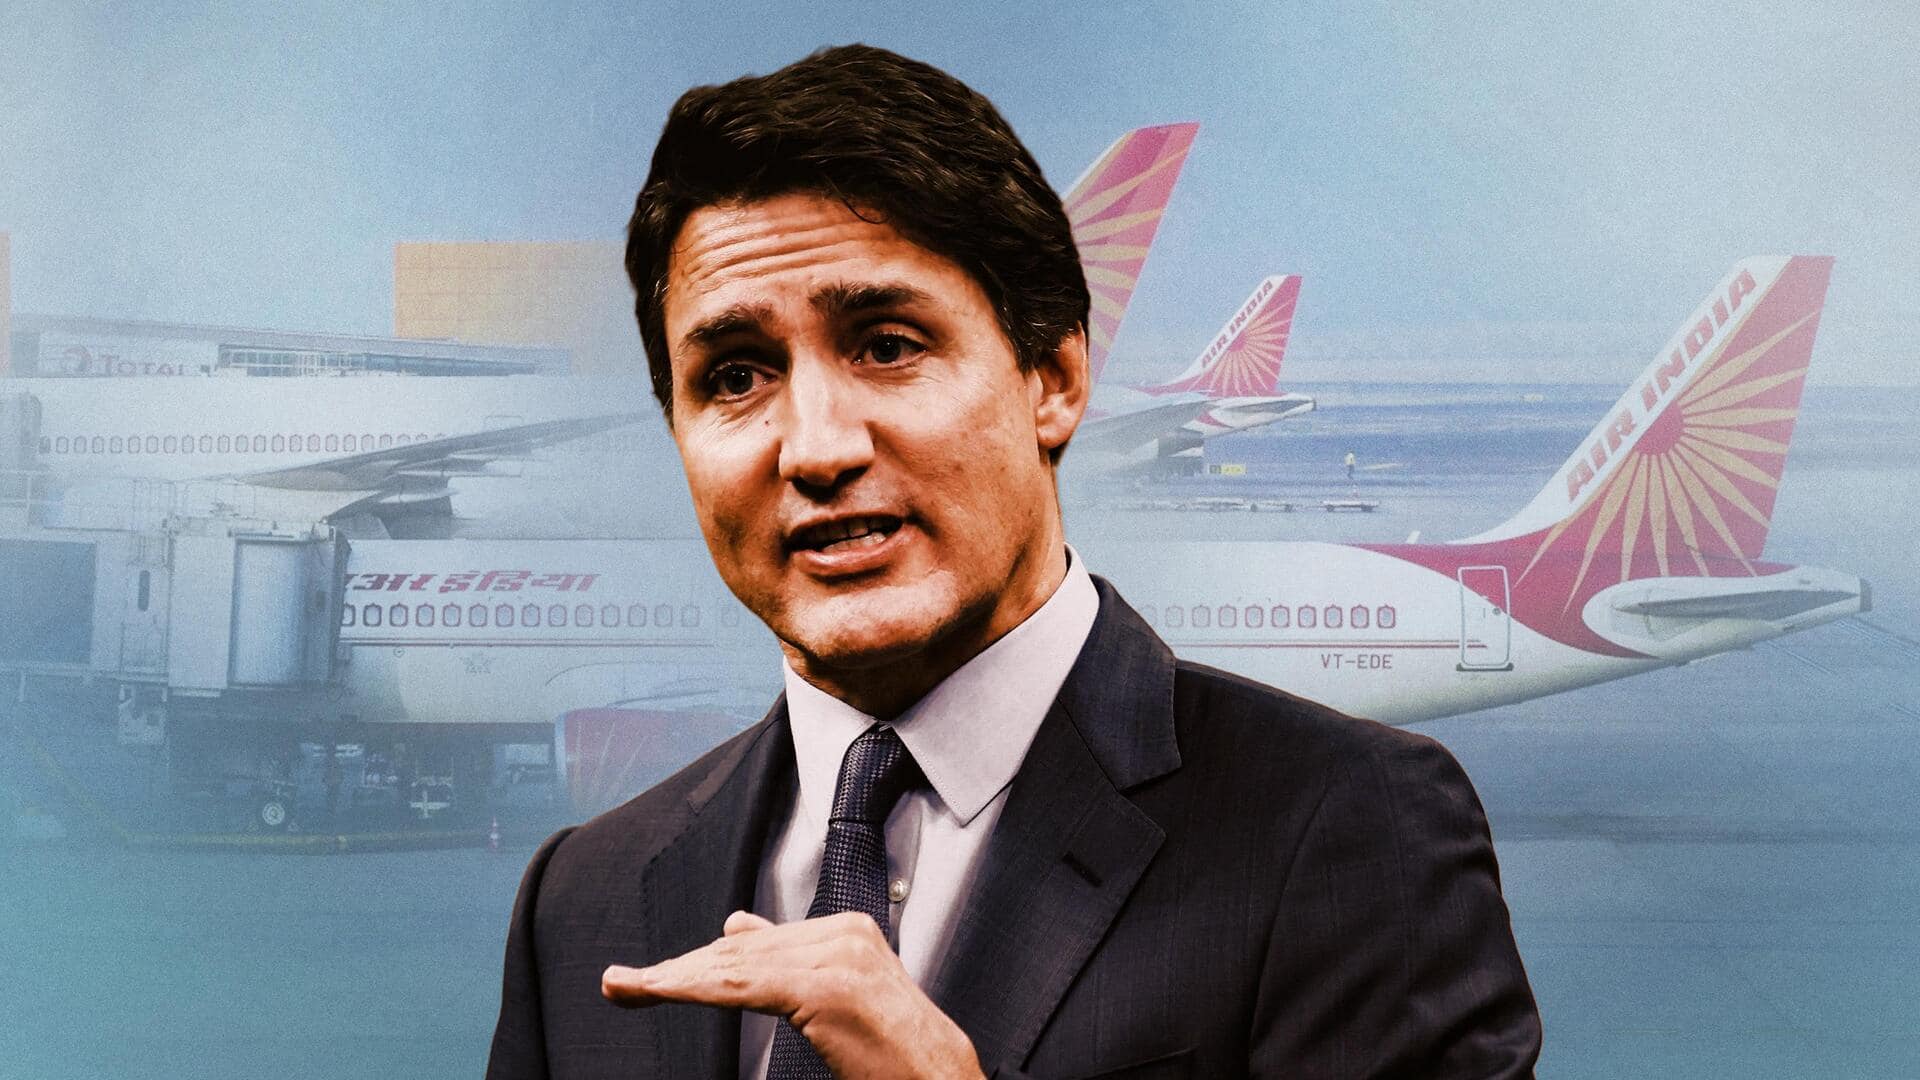 Canada increases Air India flight security following Khalistani leader's threat